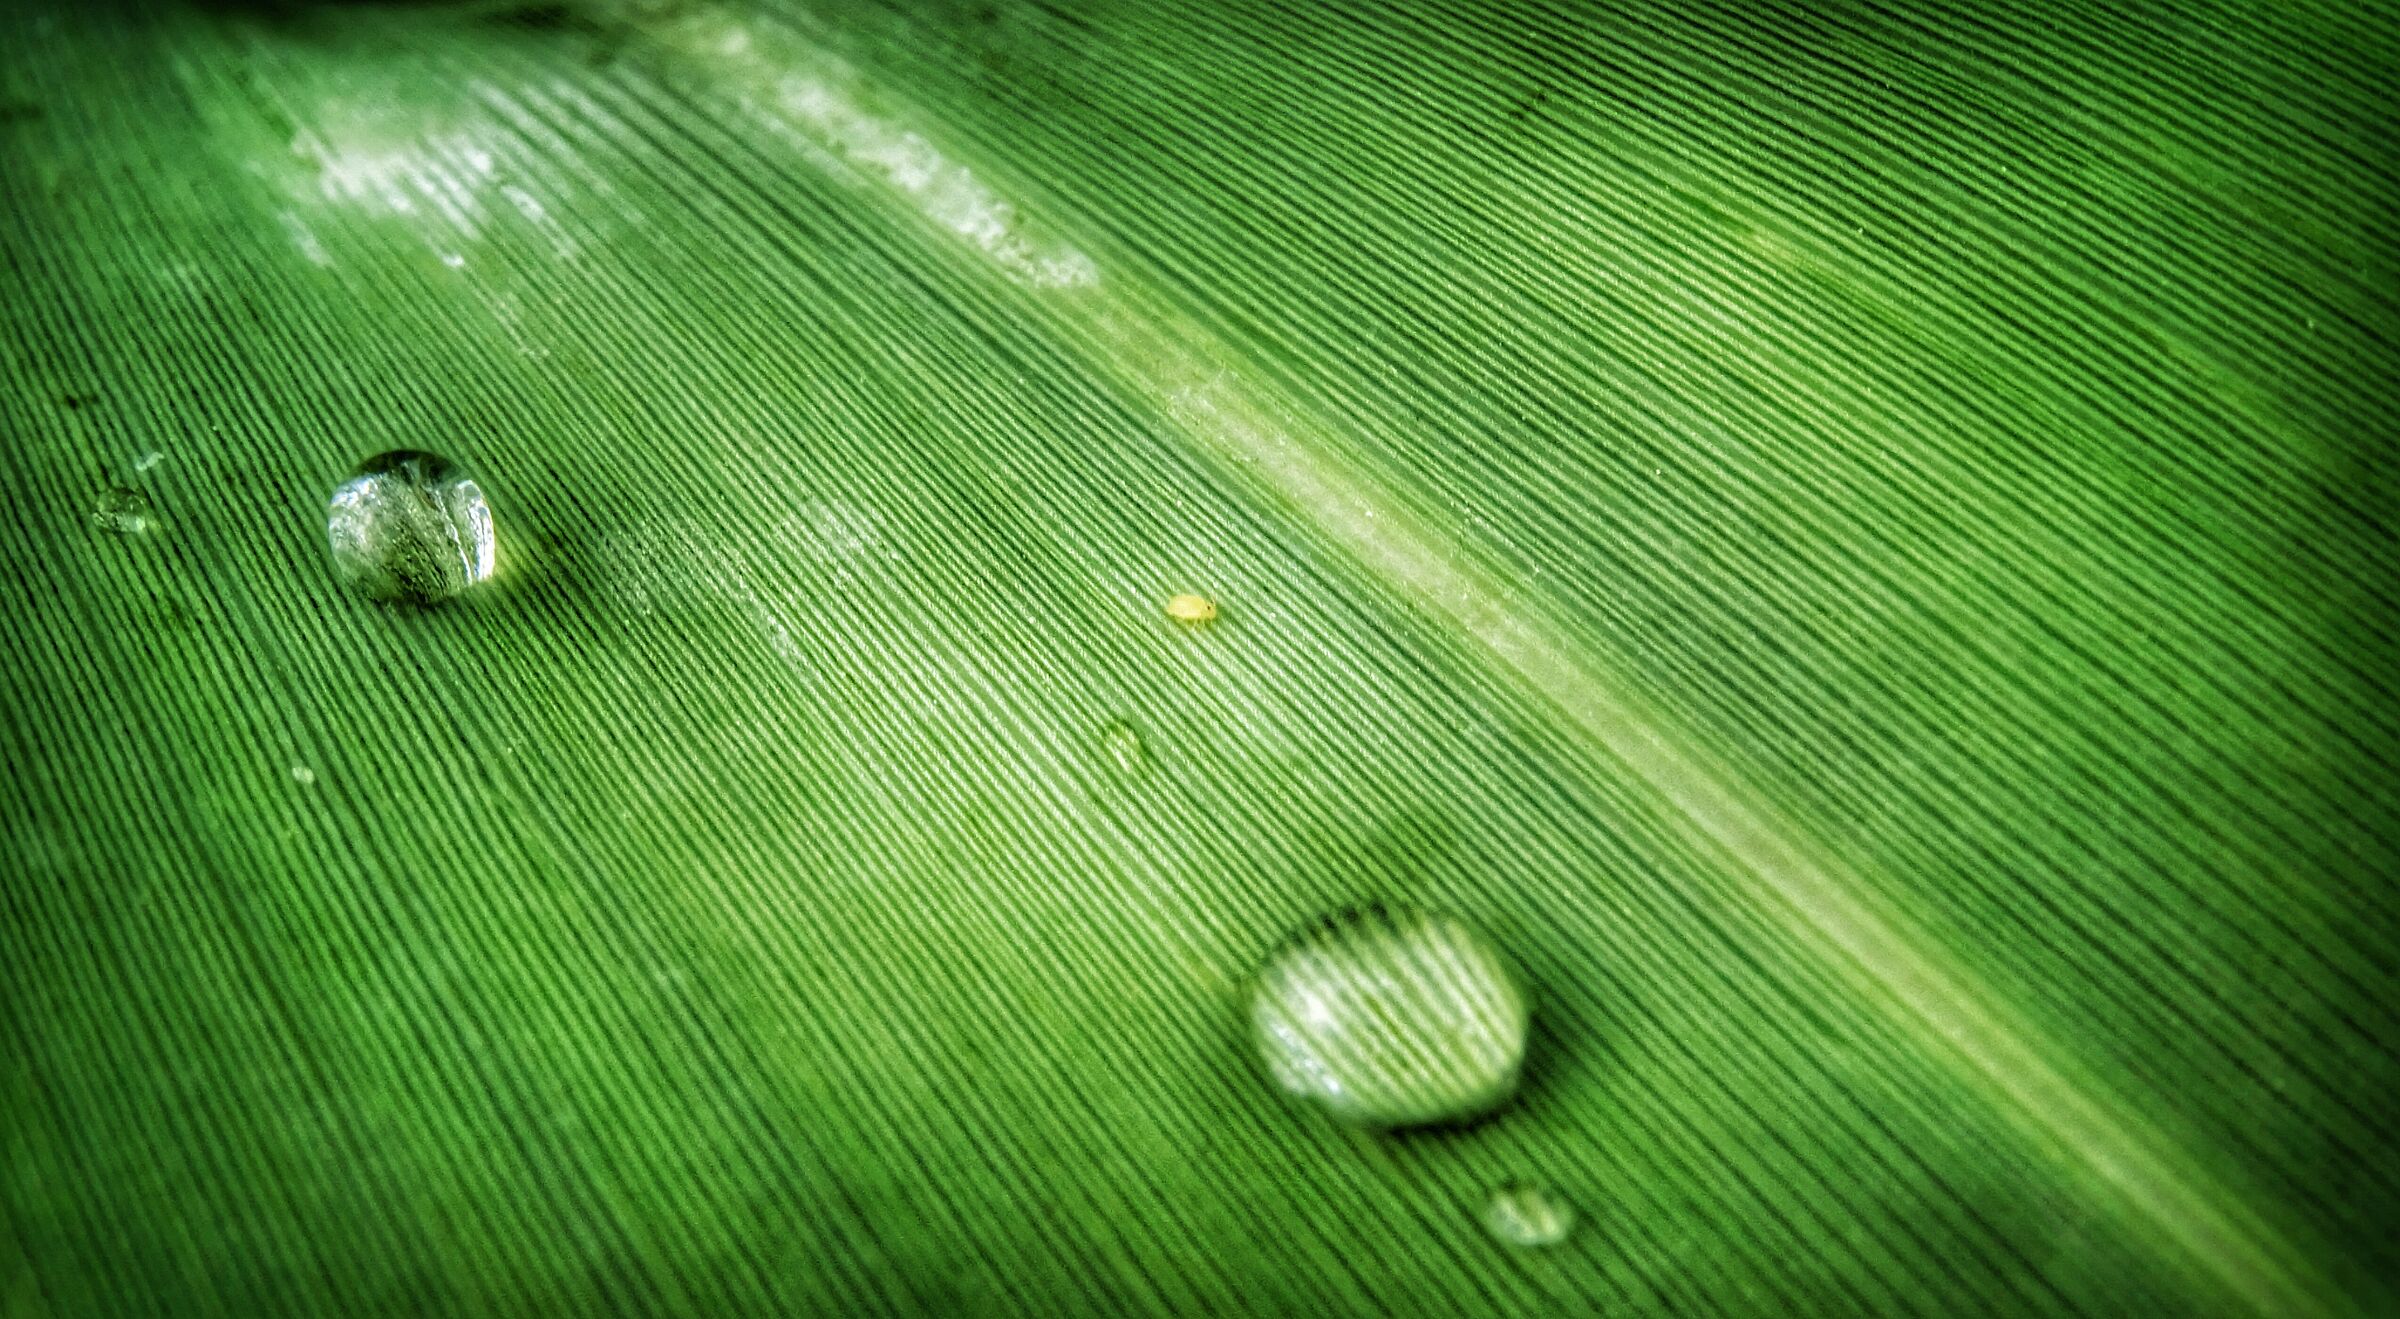 Dew on the leaf ...